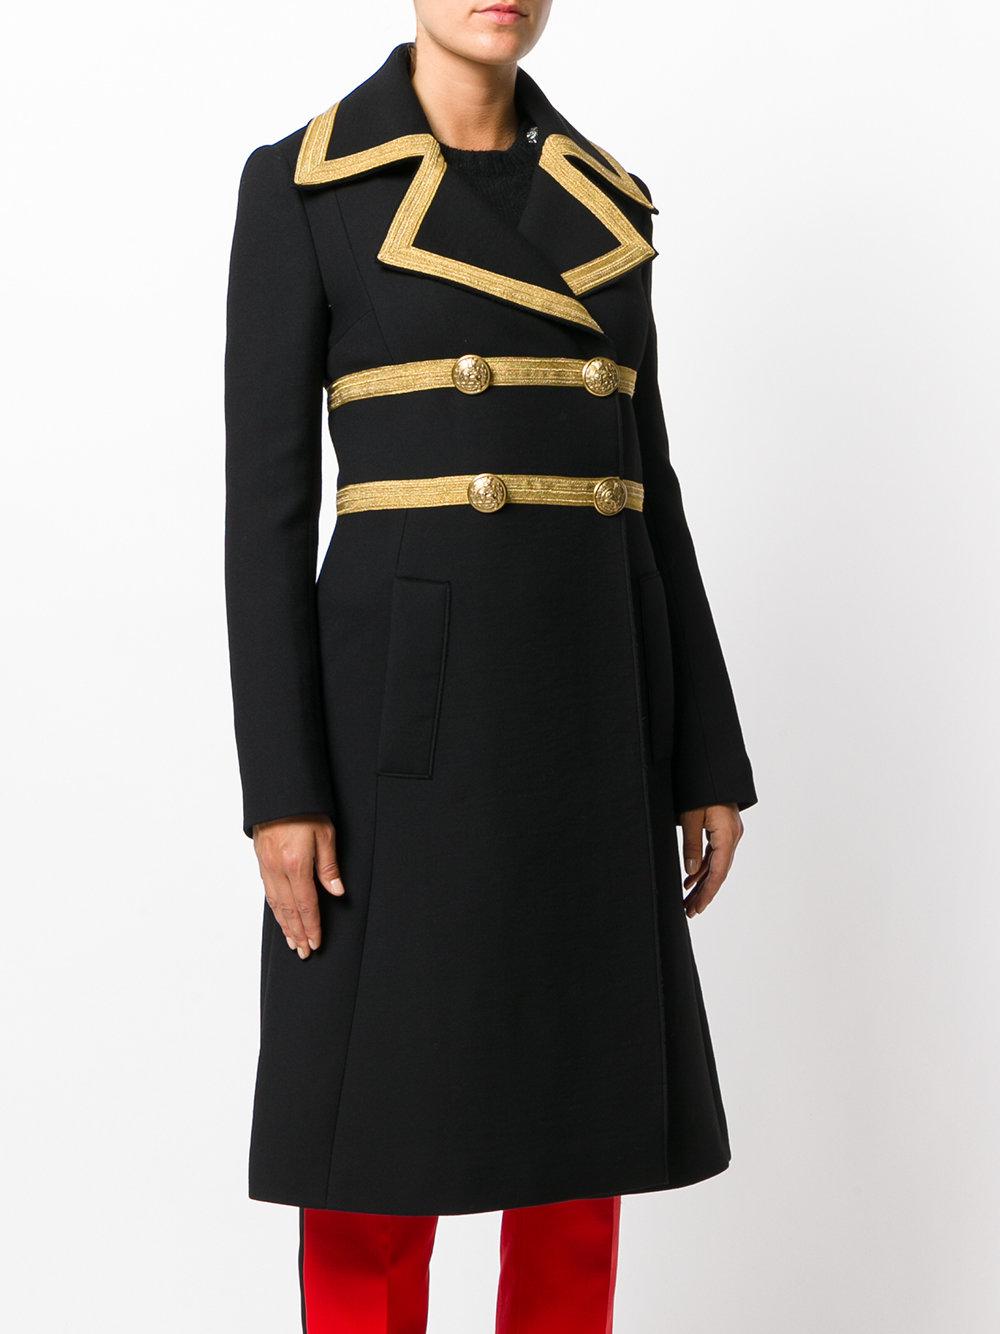 Lyst - Dolce & gabbana Military Coat in Black